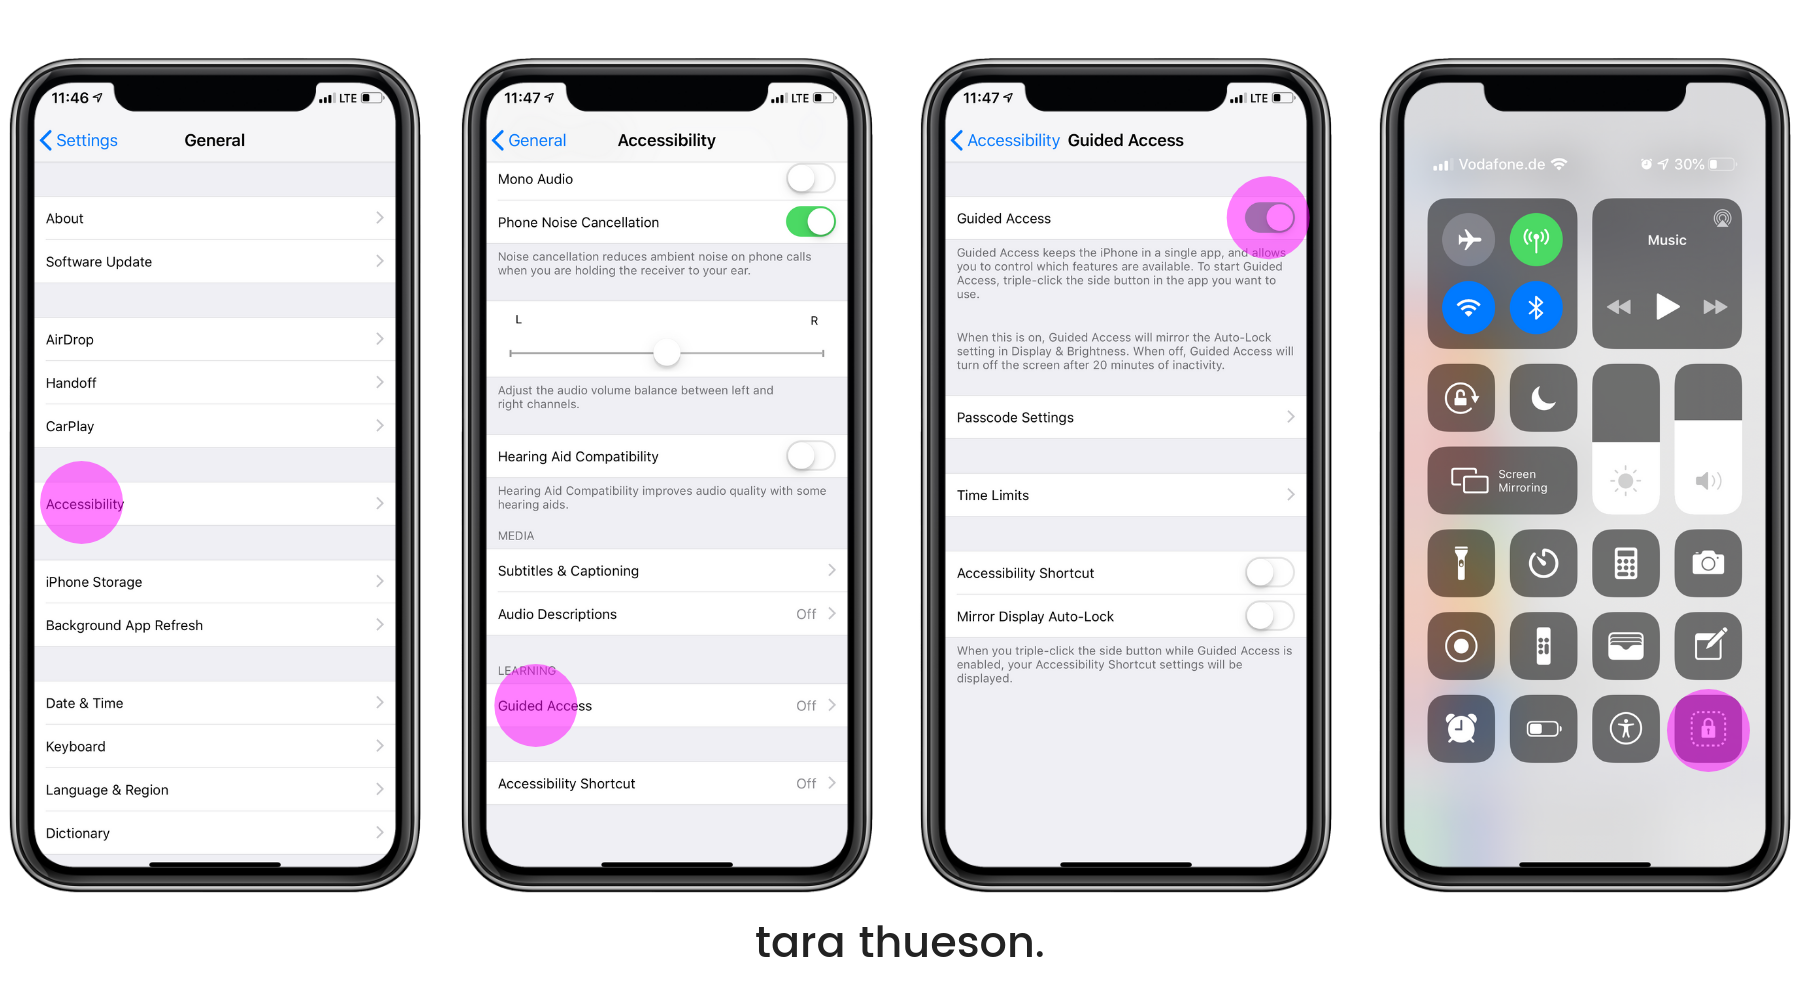 Gambar Tech Tuesday: iPhone Hacks - Tara Thueson